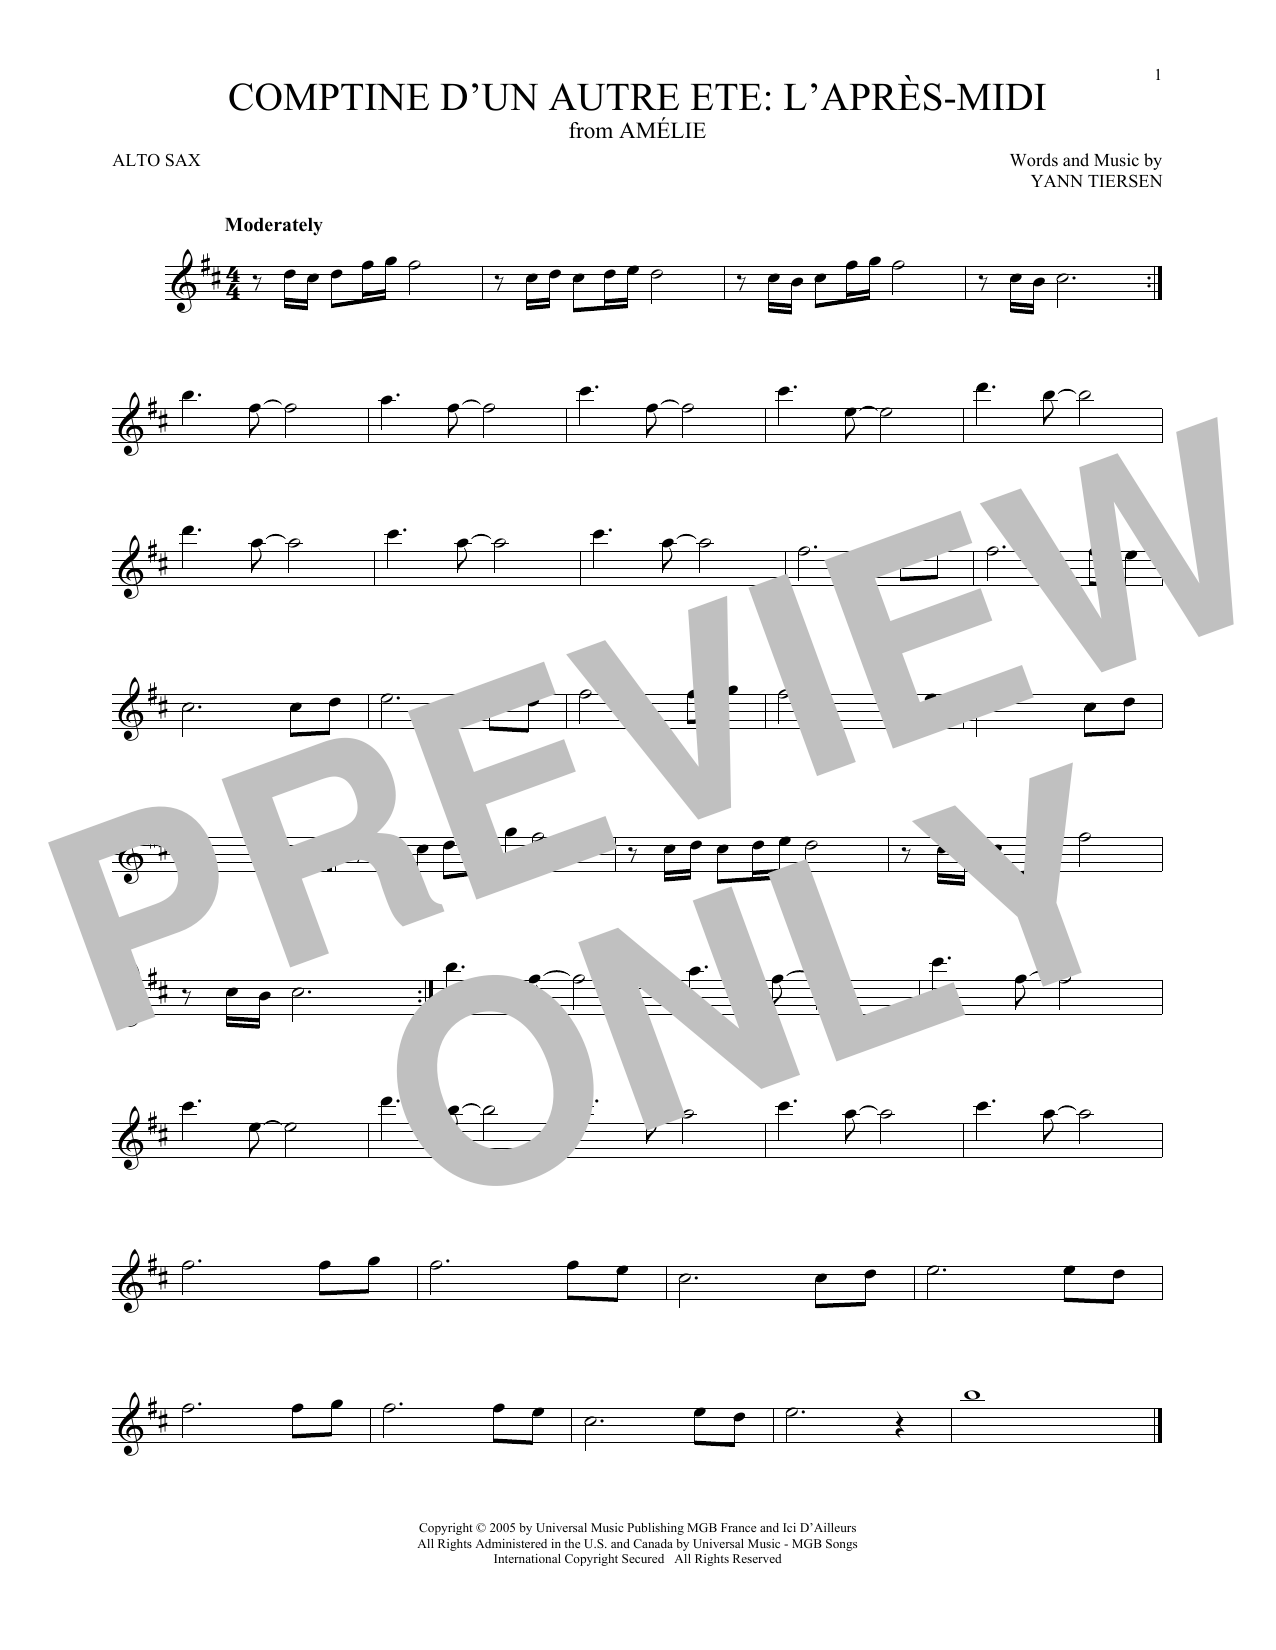 Download Yann Tiersen Comptine d'un autre été: L'après-midi (from Amelie) Sheet Music and learn how to play Violin Solo PDF digital score in minutes